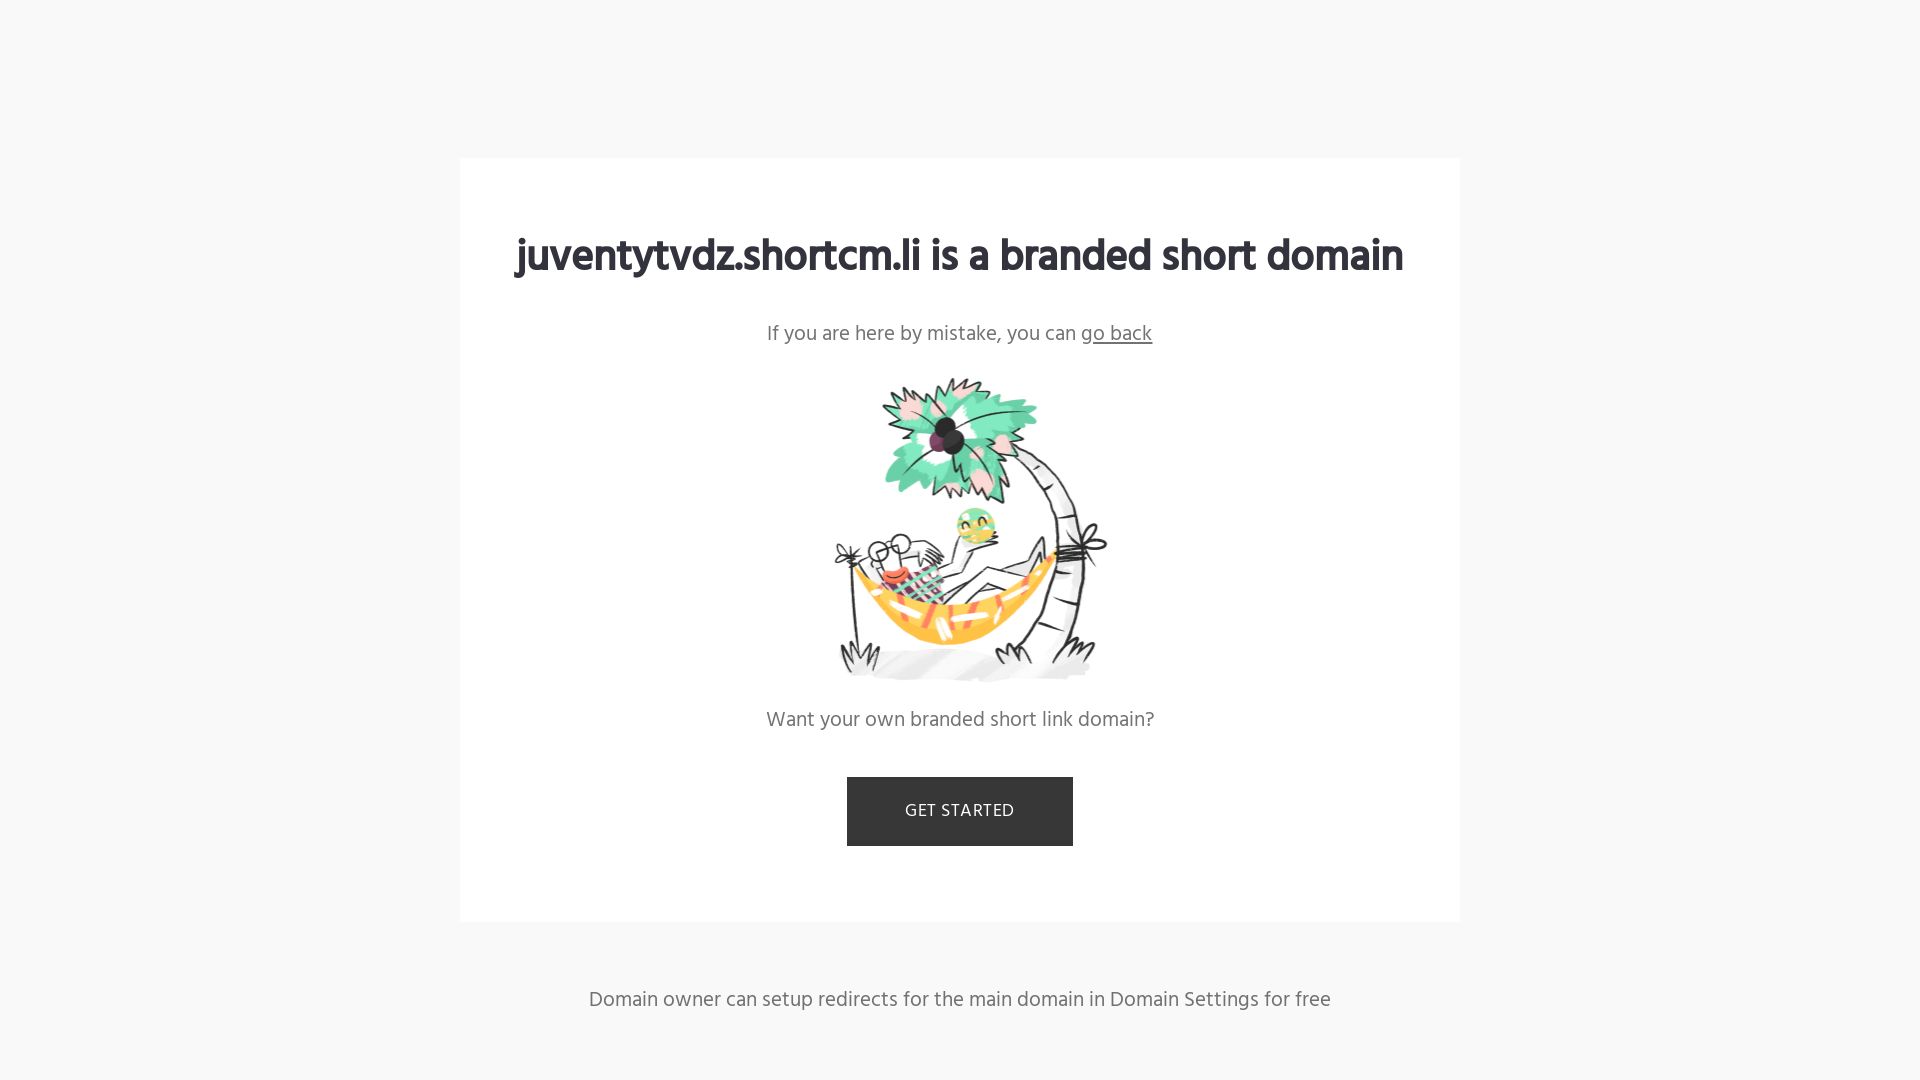 Website status juventytvdz.shortcm.li is   ONLINE